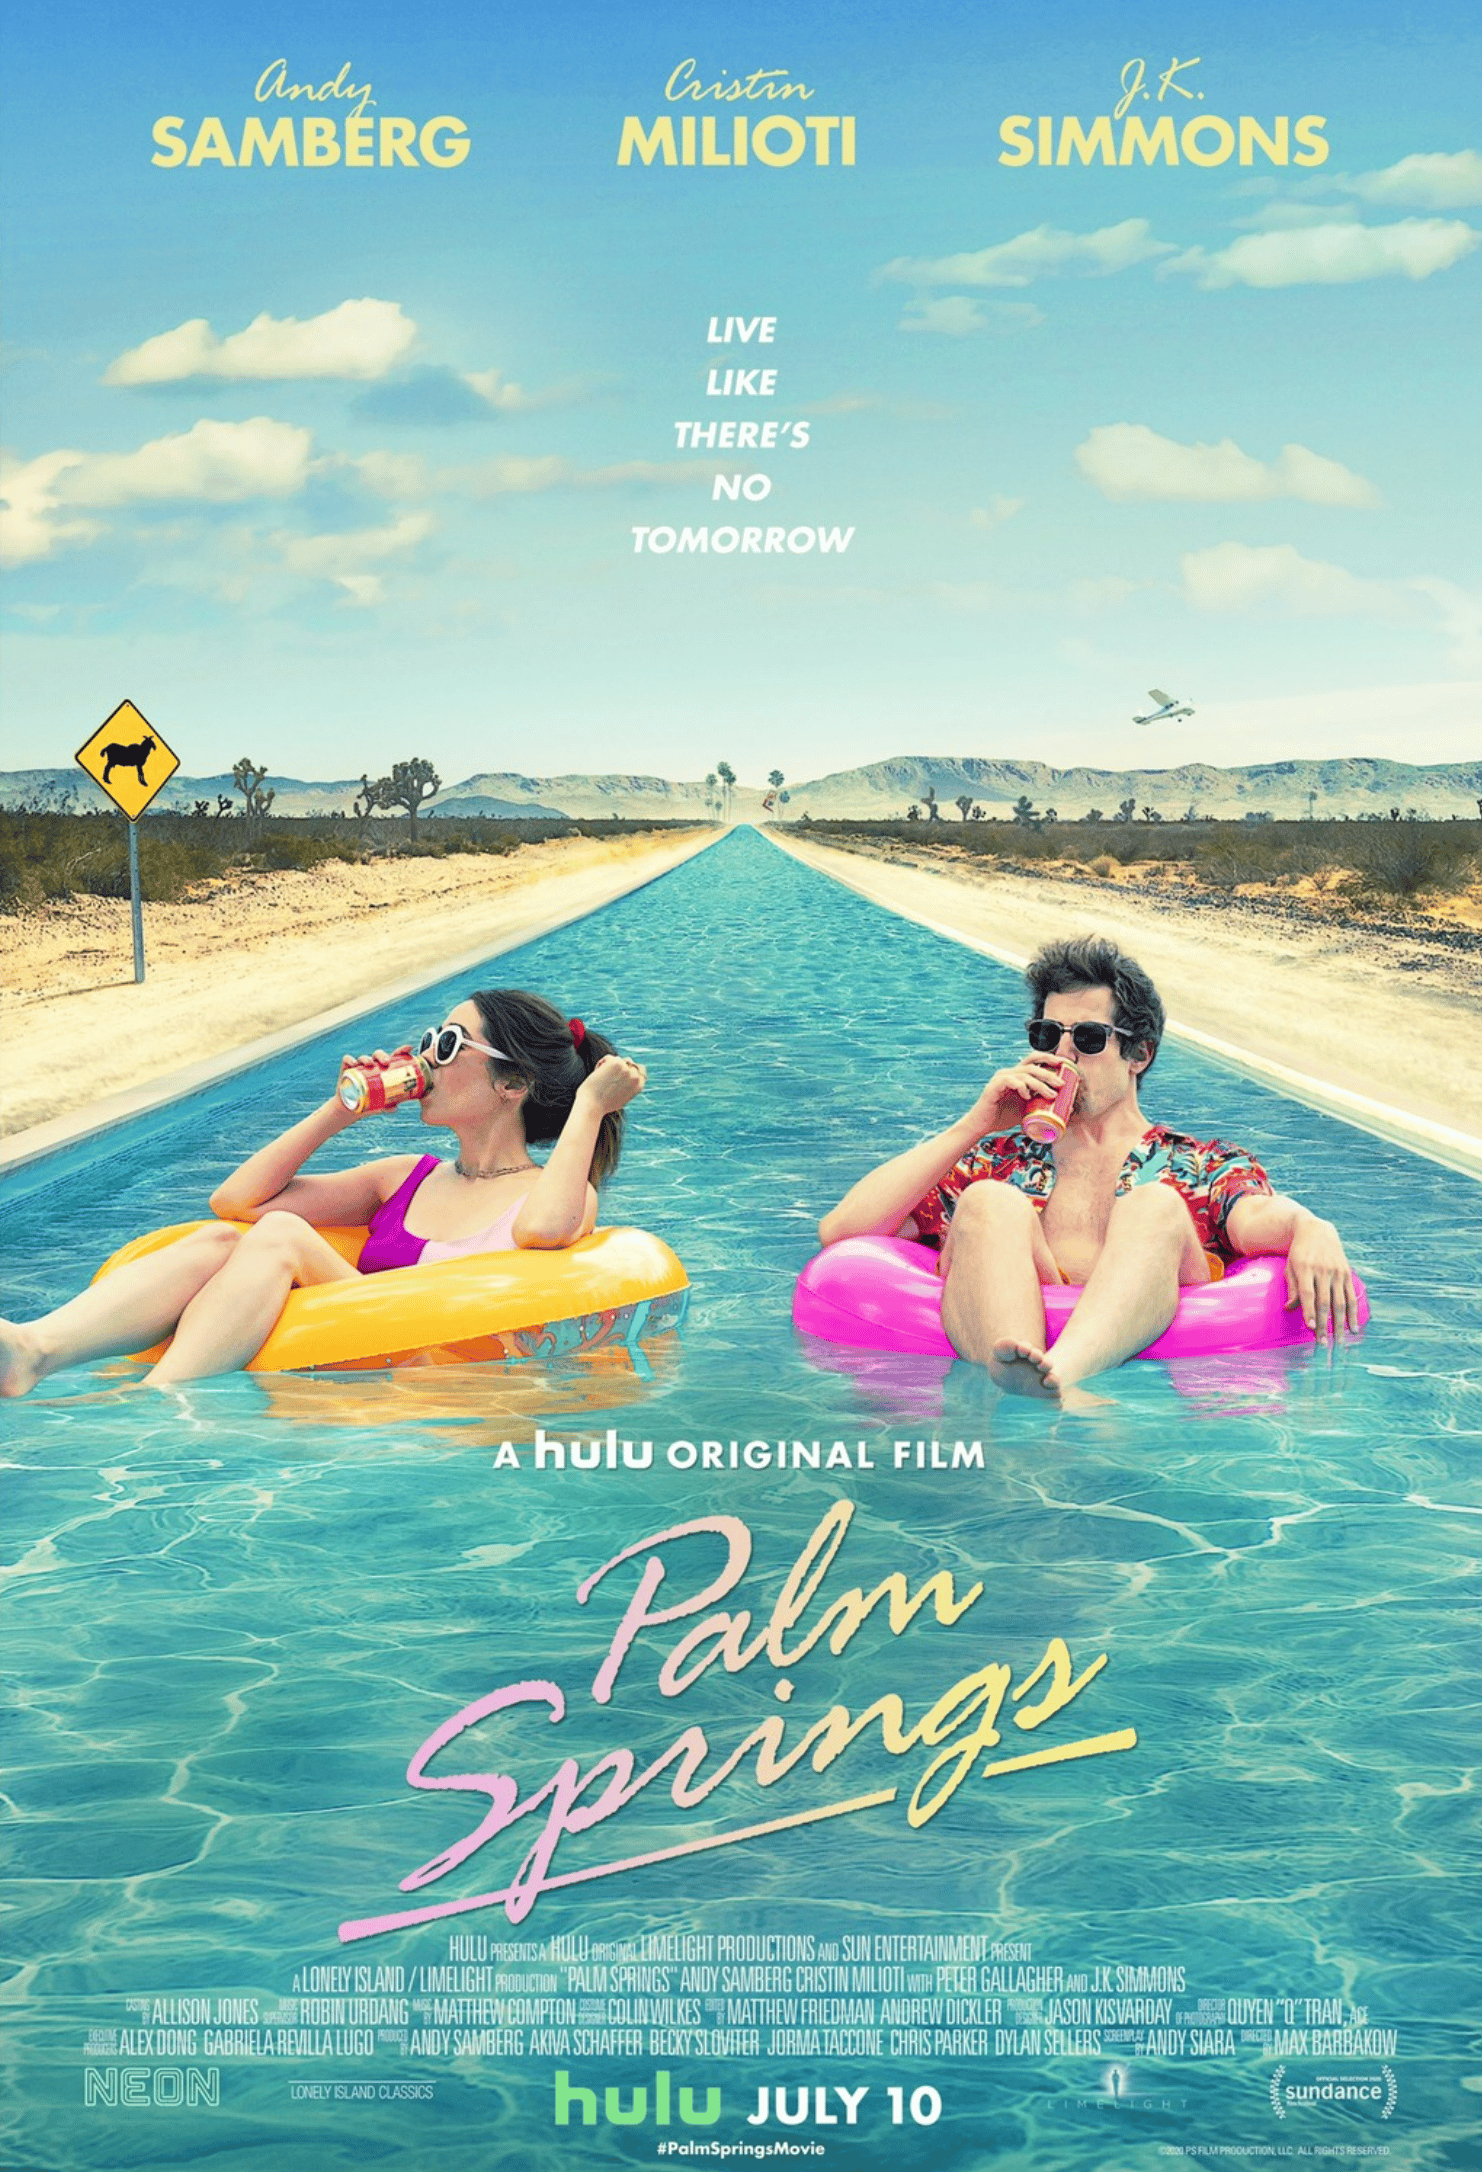 Filmtipp: Palm Springs mit Andy Samberg.